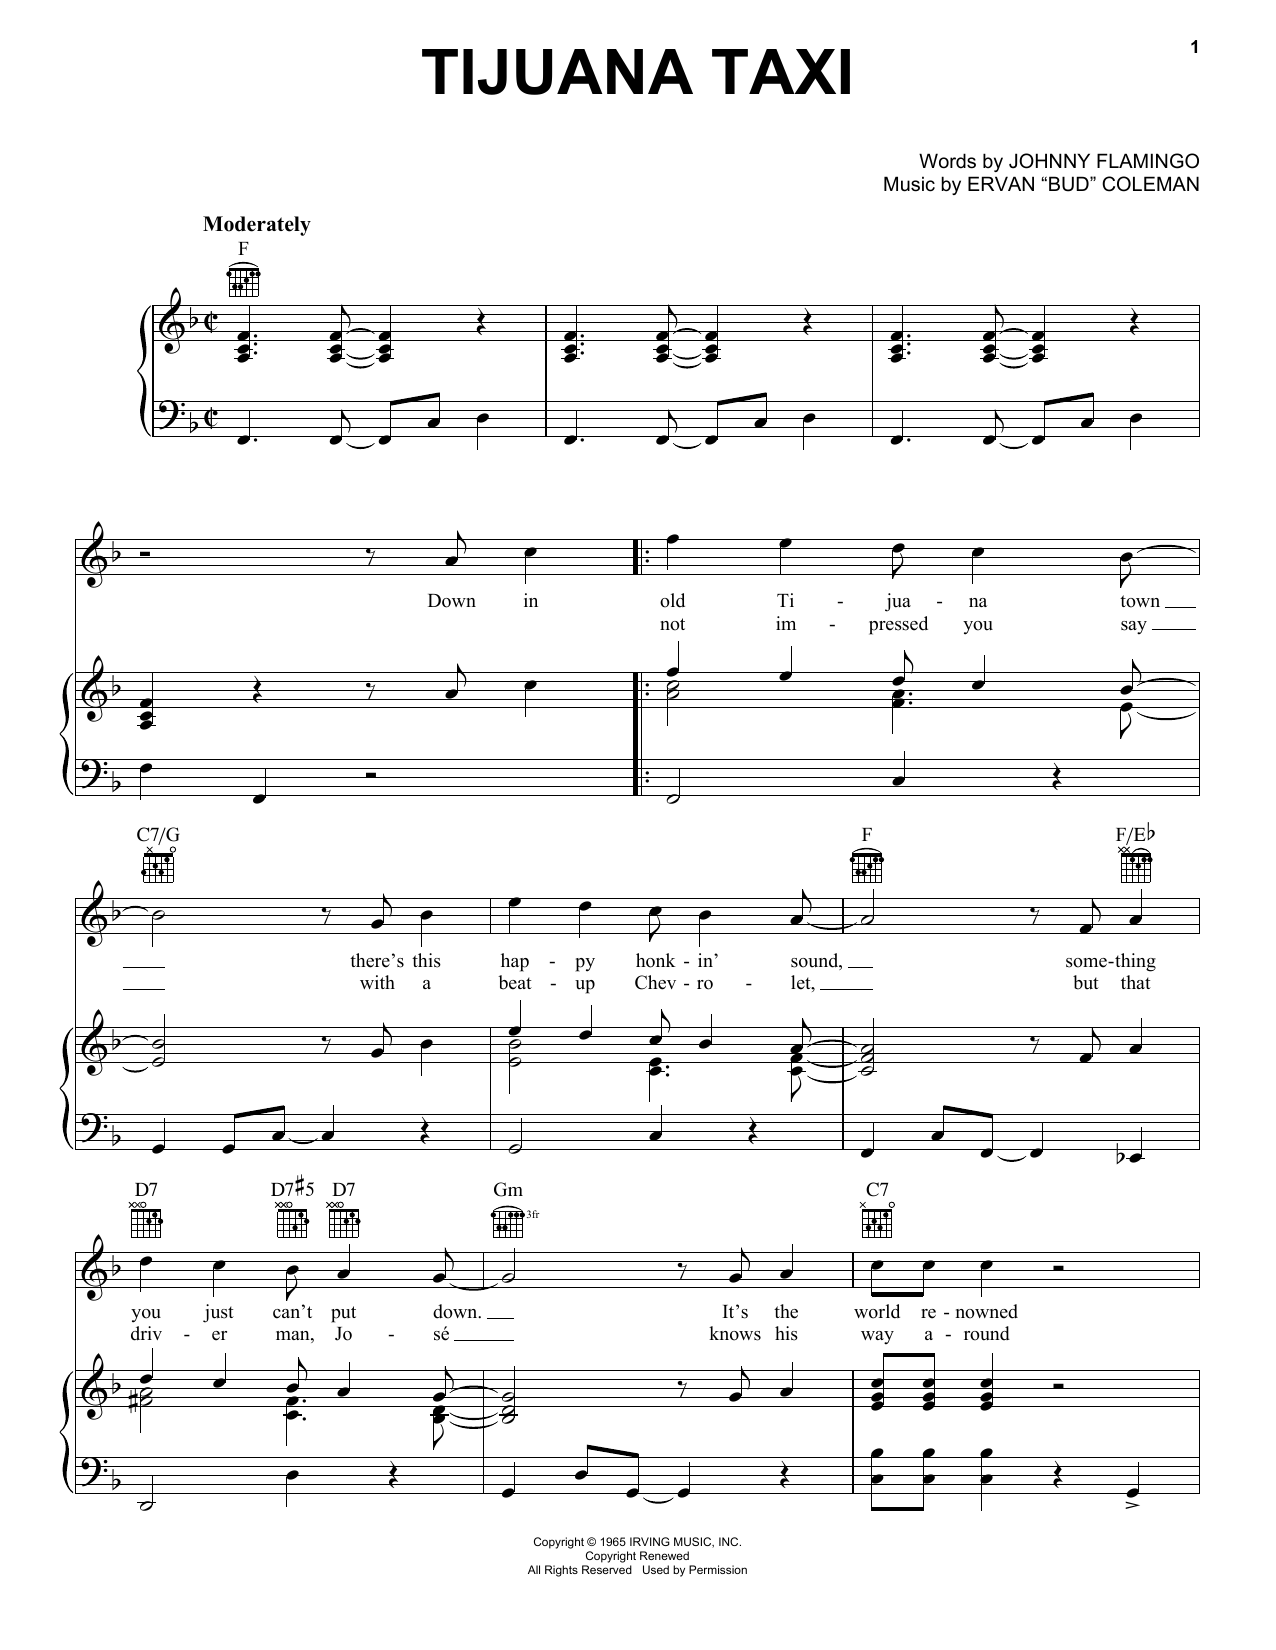 Herb Alpert & The Tijuana Brass Band Tijuana Taxi Sheet Music Notes & Chords for Alto Saxophone - Download or Print PDF